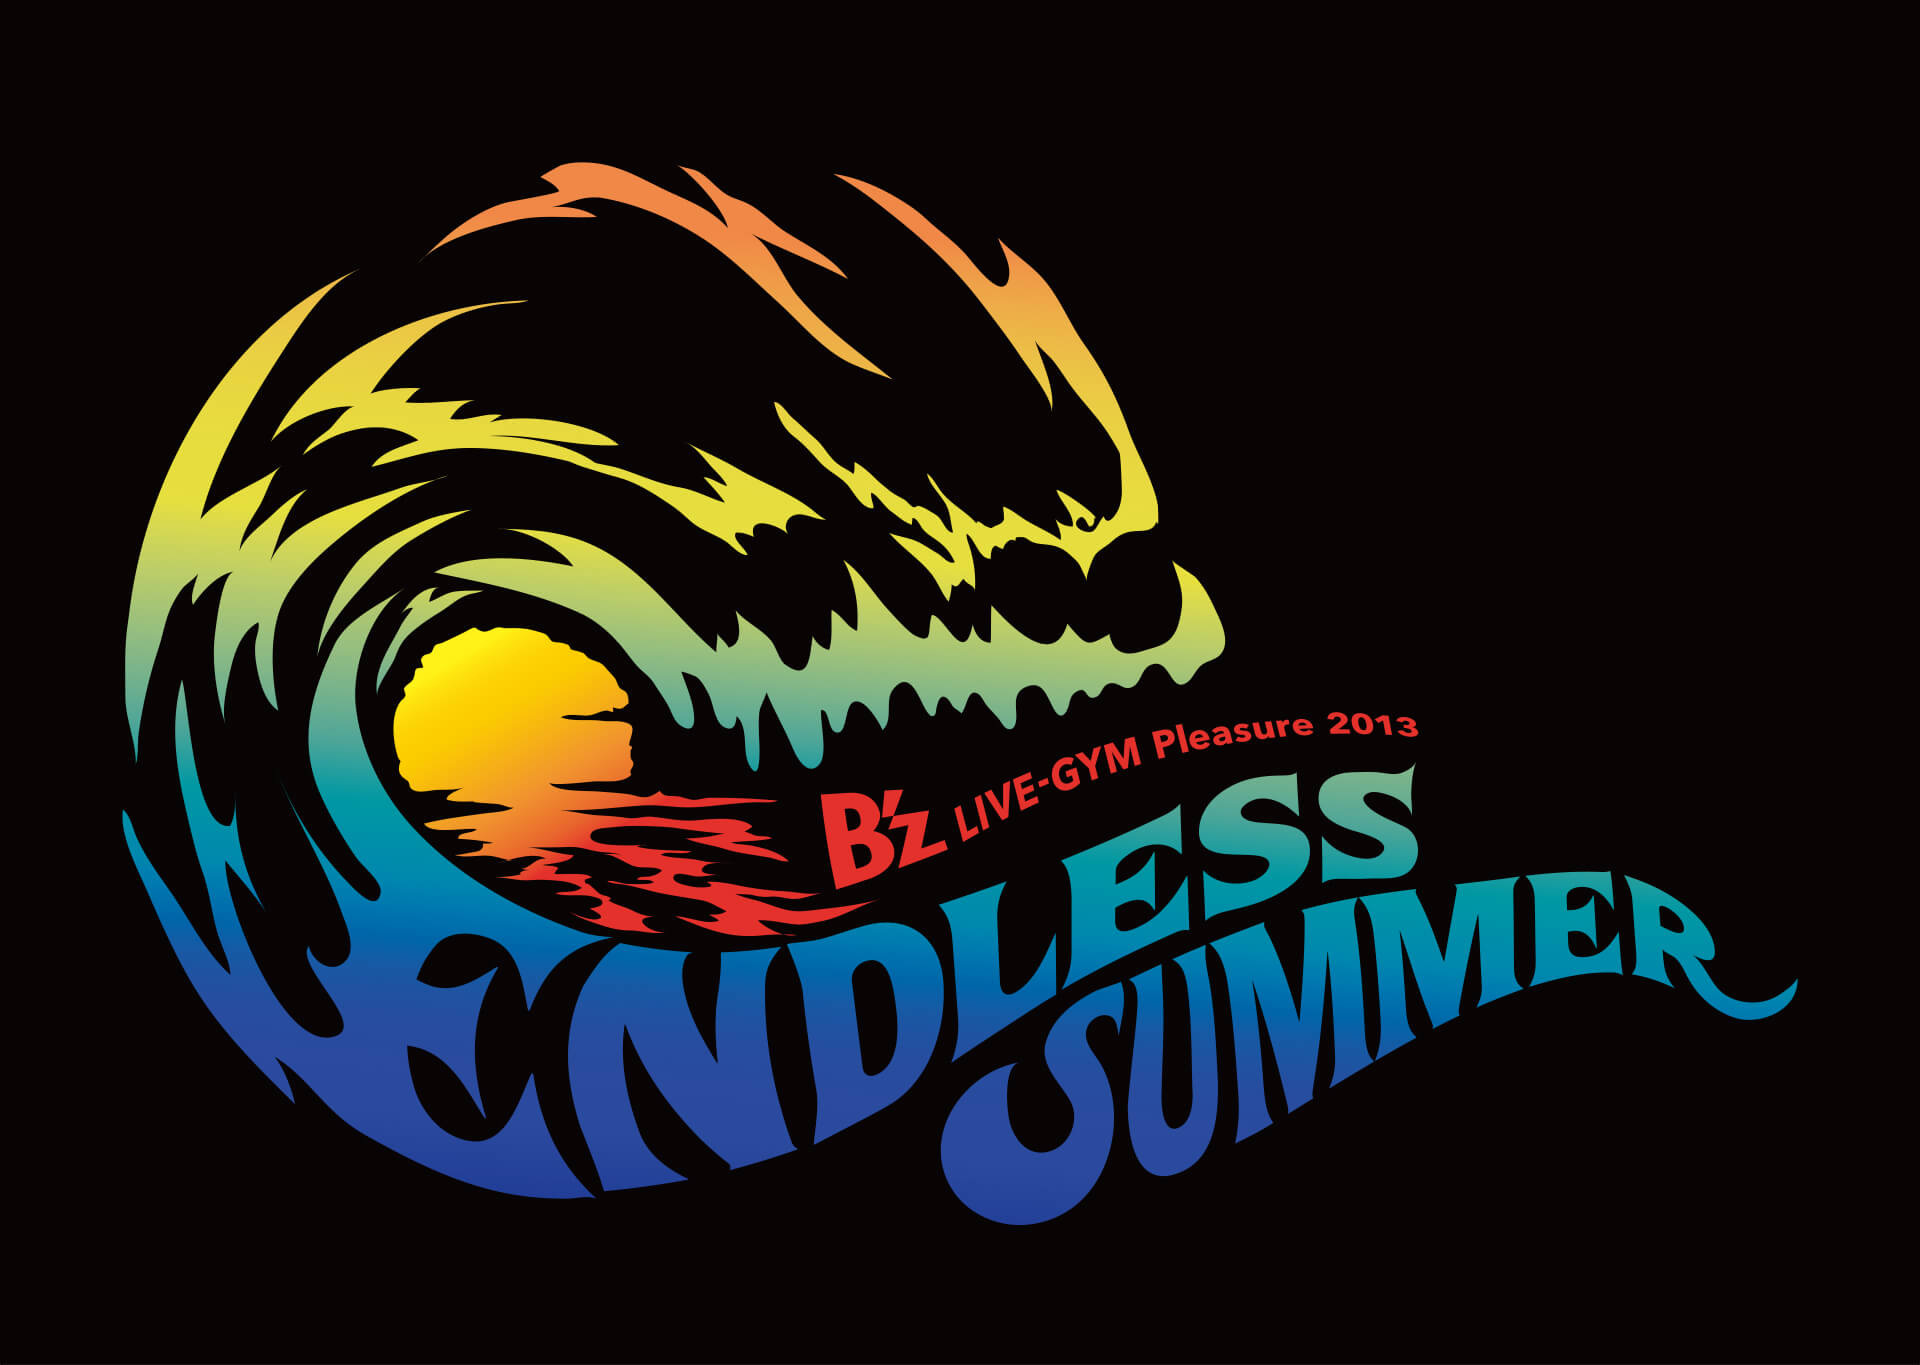 B Z Live Gym Pleasure 13 Endless Summer Unite Graphica Co Ltd 株式会社ユナイトグラフィカ